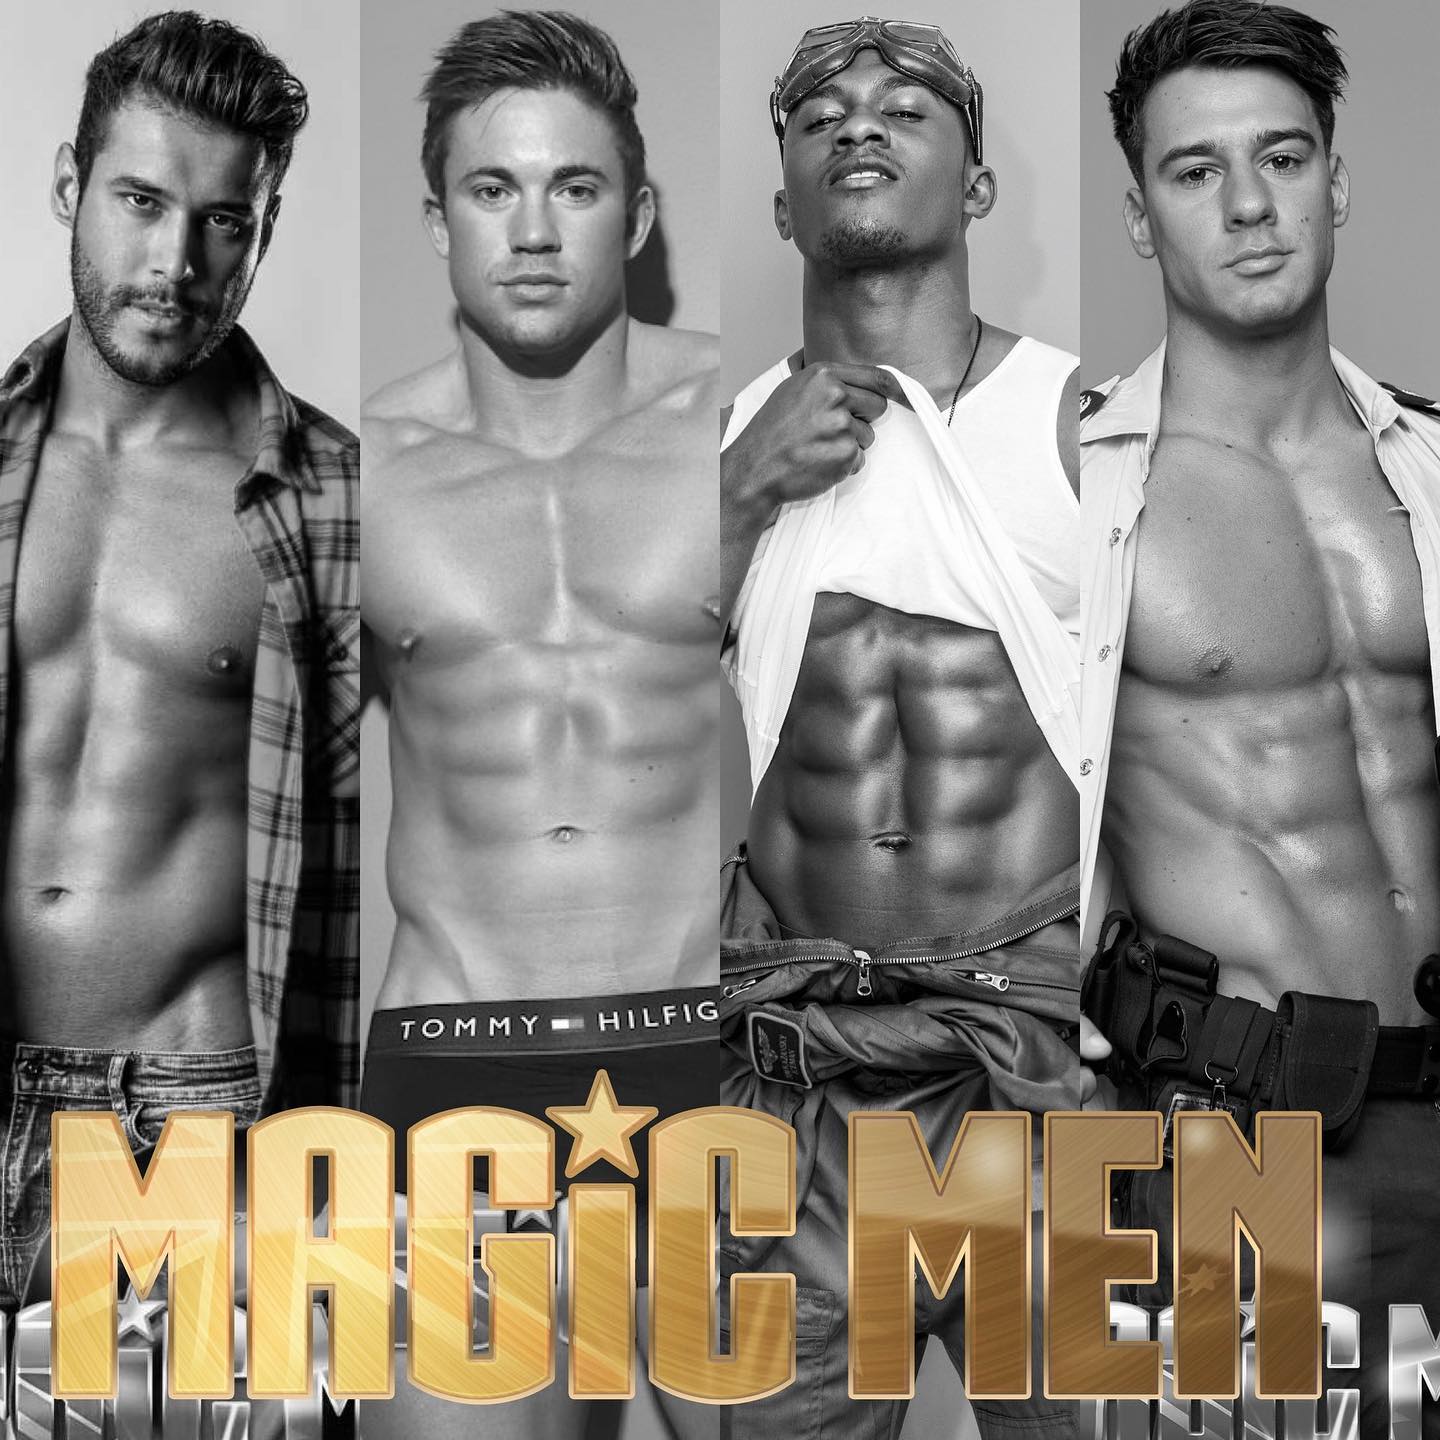 Magic Men Hottest Male Strip Clubs Melbourne Live Male Strip Shows.